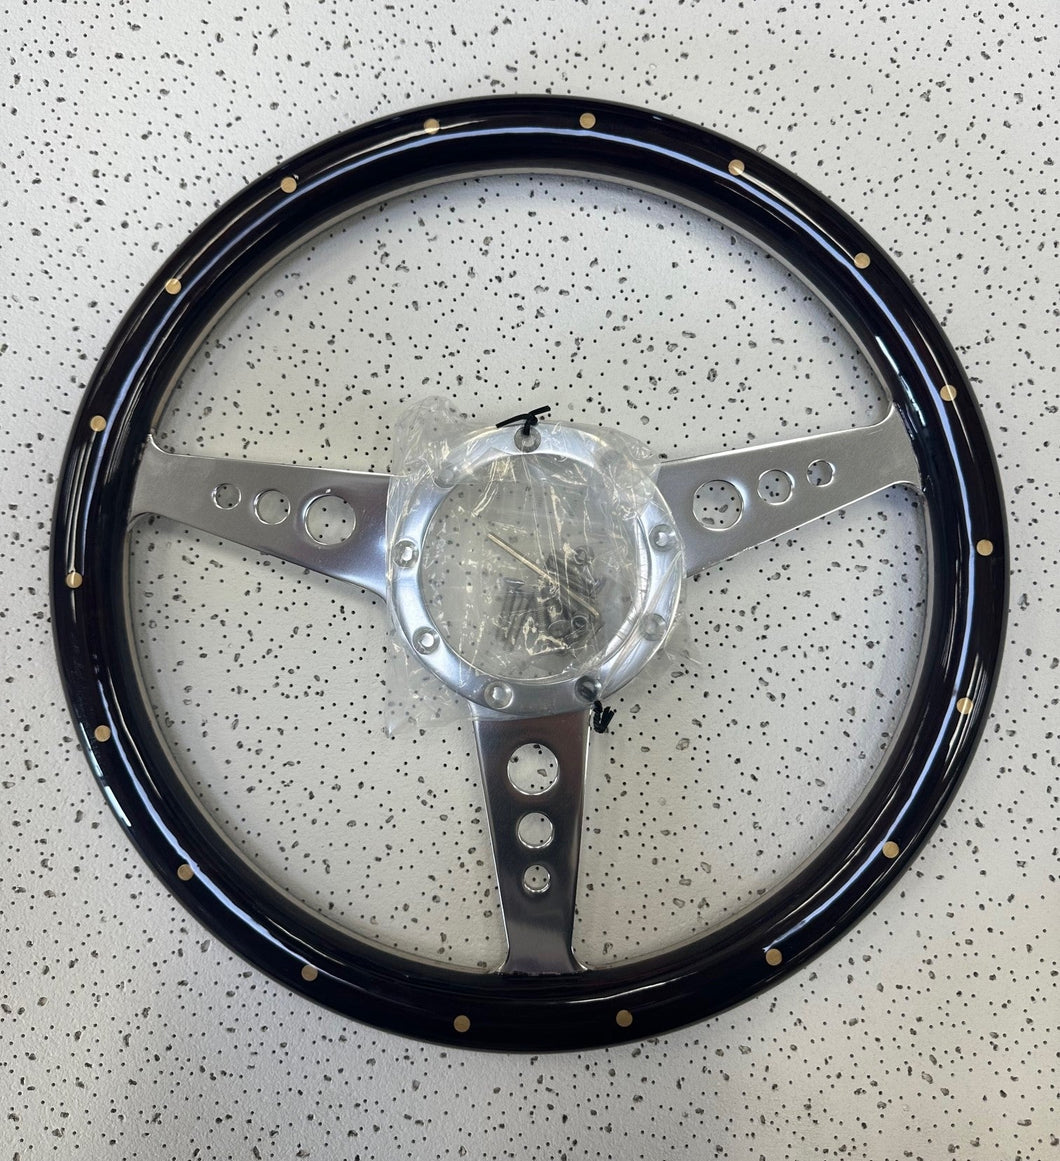 Spitfire-489-095 Tourist Trophy Steering Wheel 14